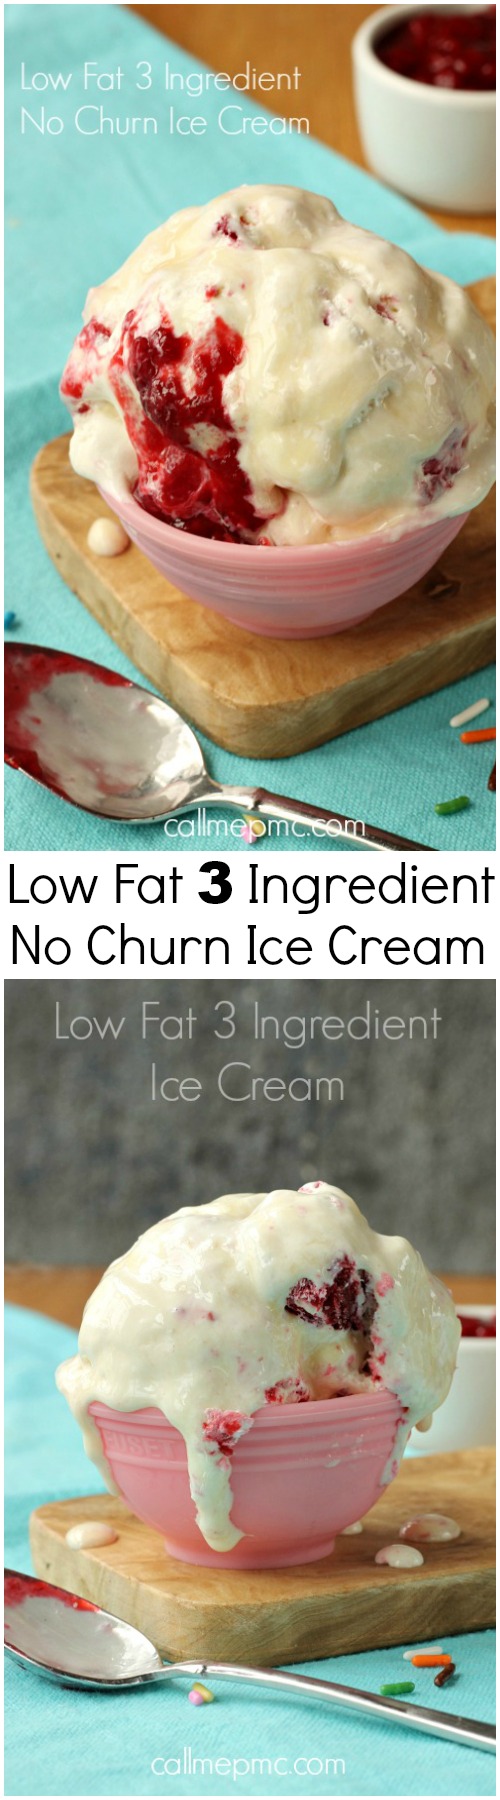 Low Fat 3 Ingredient No churn Ice Cream